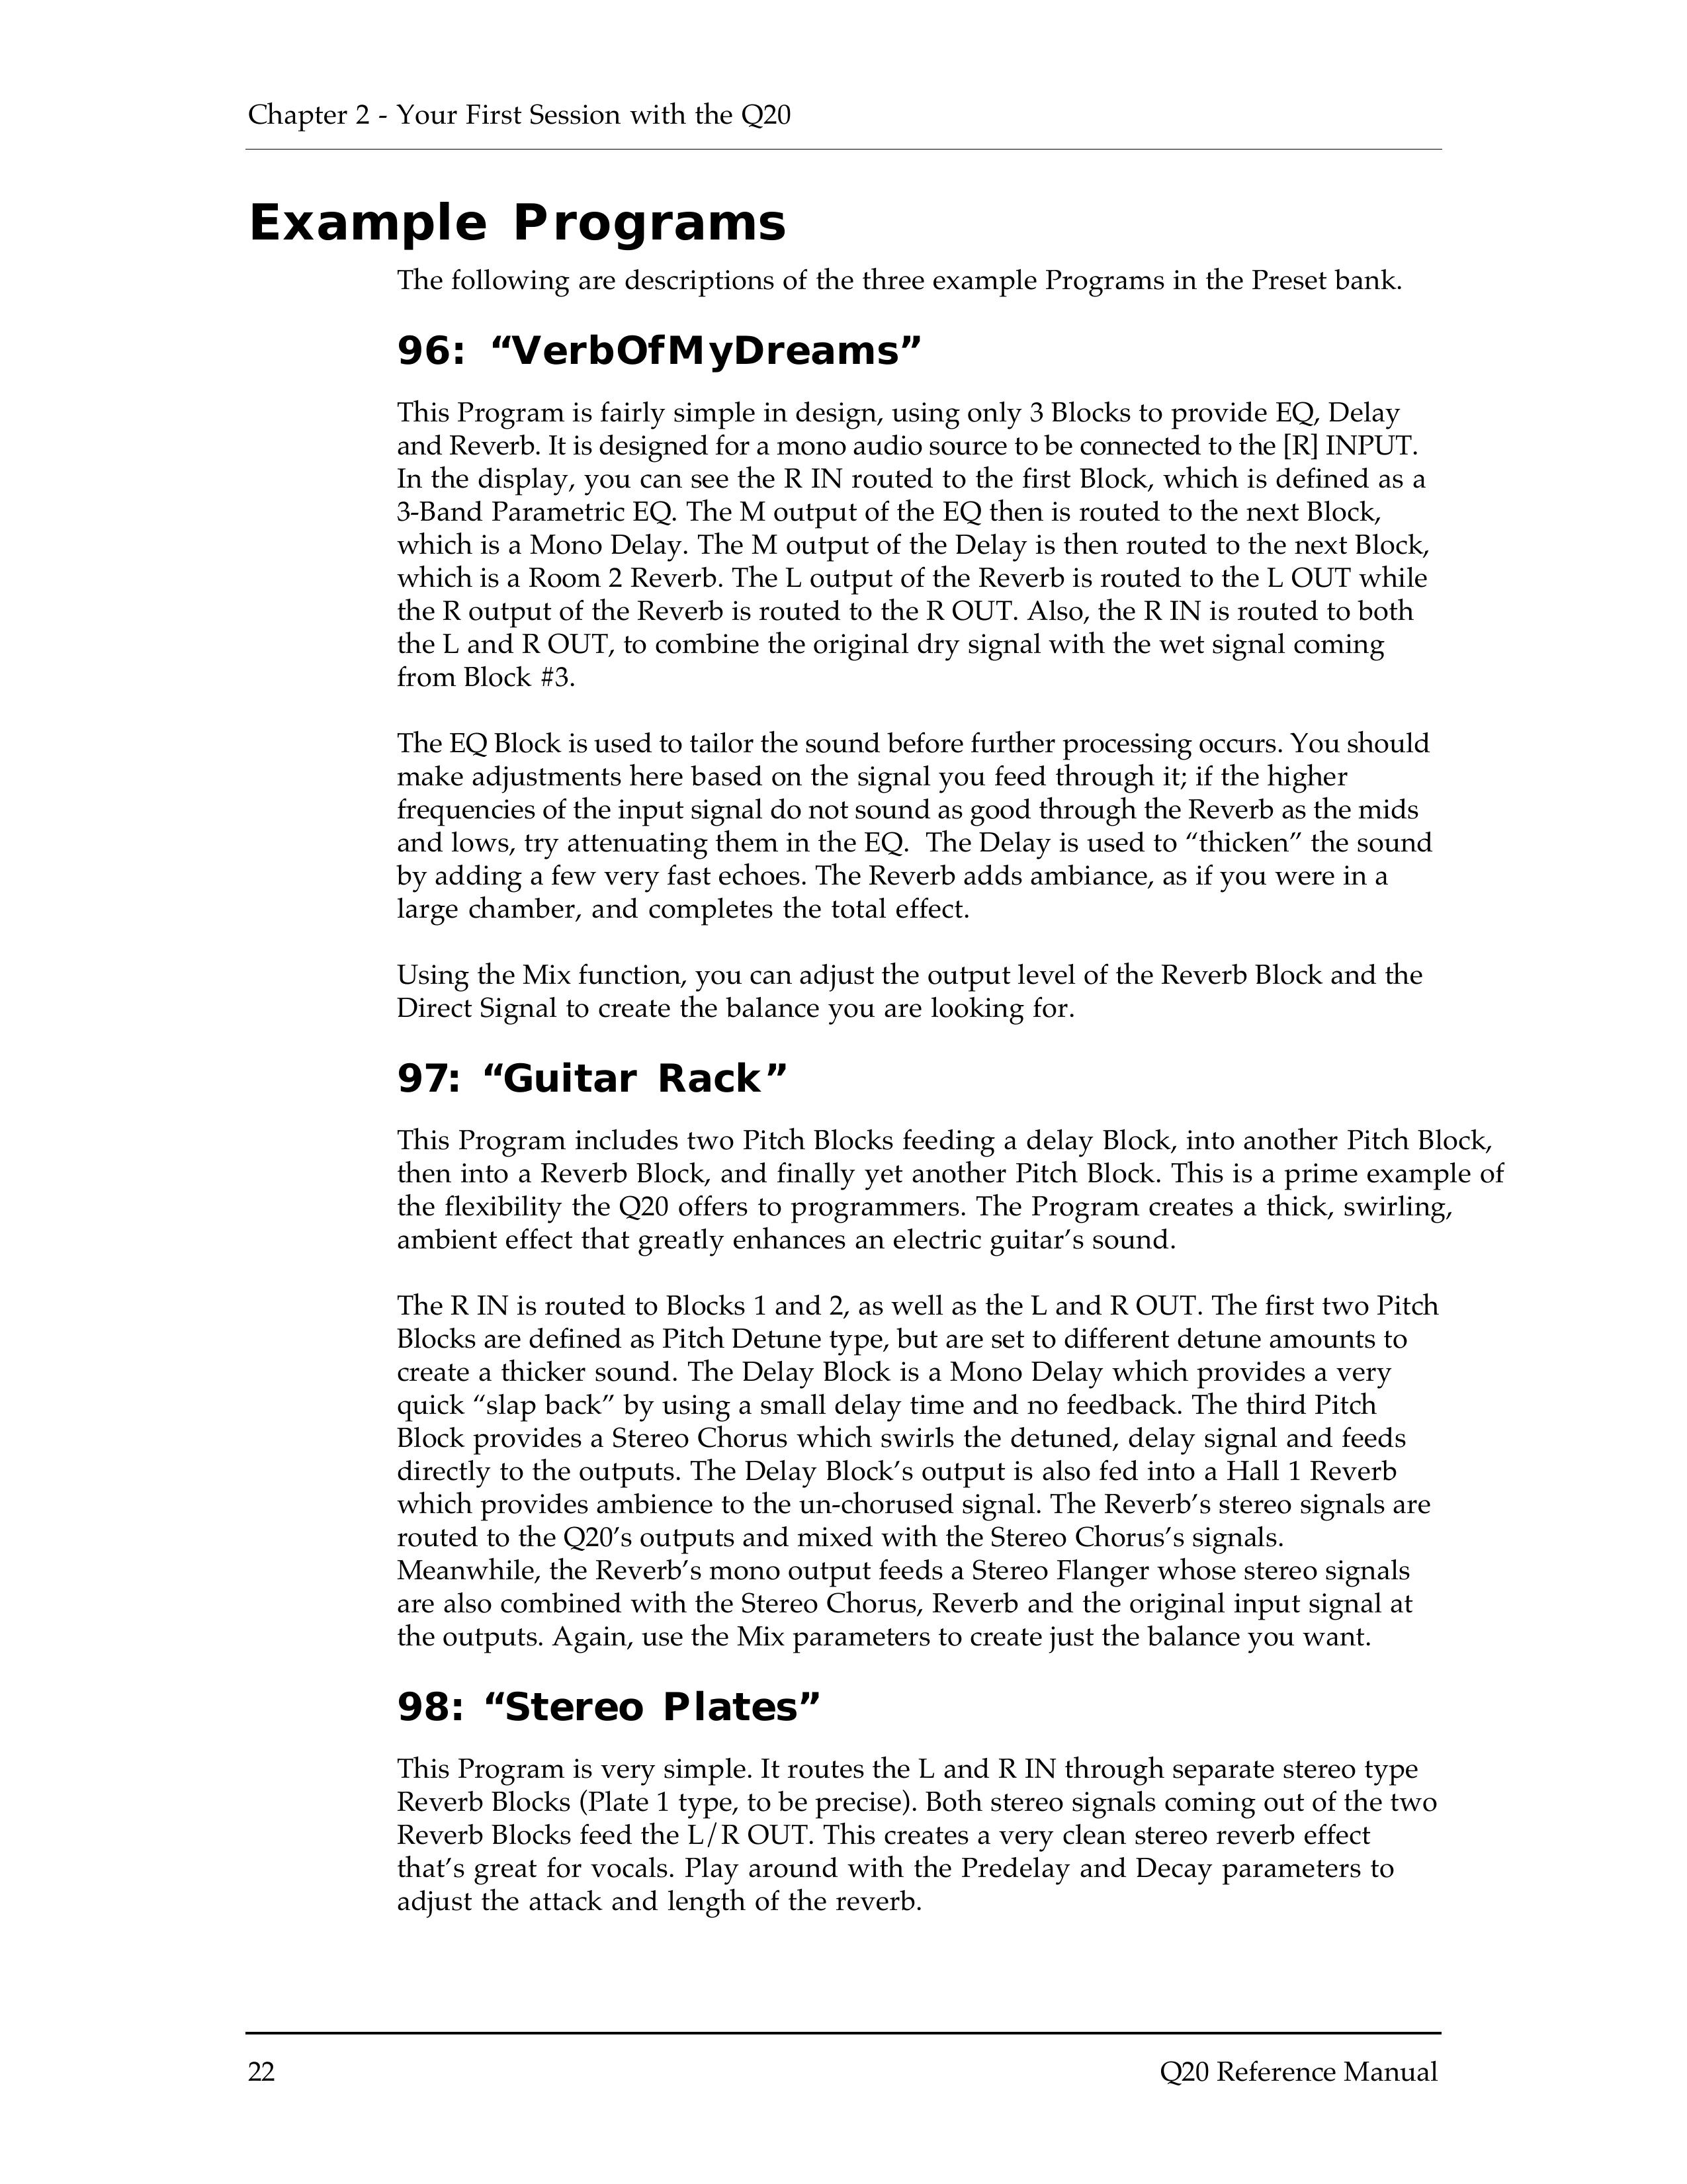 Alesis Q20 DJ Equipment User Manual (Page 24)